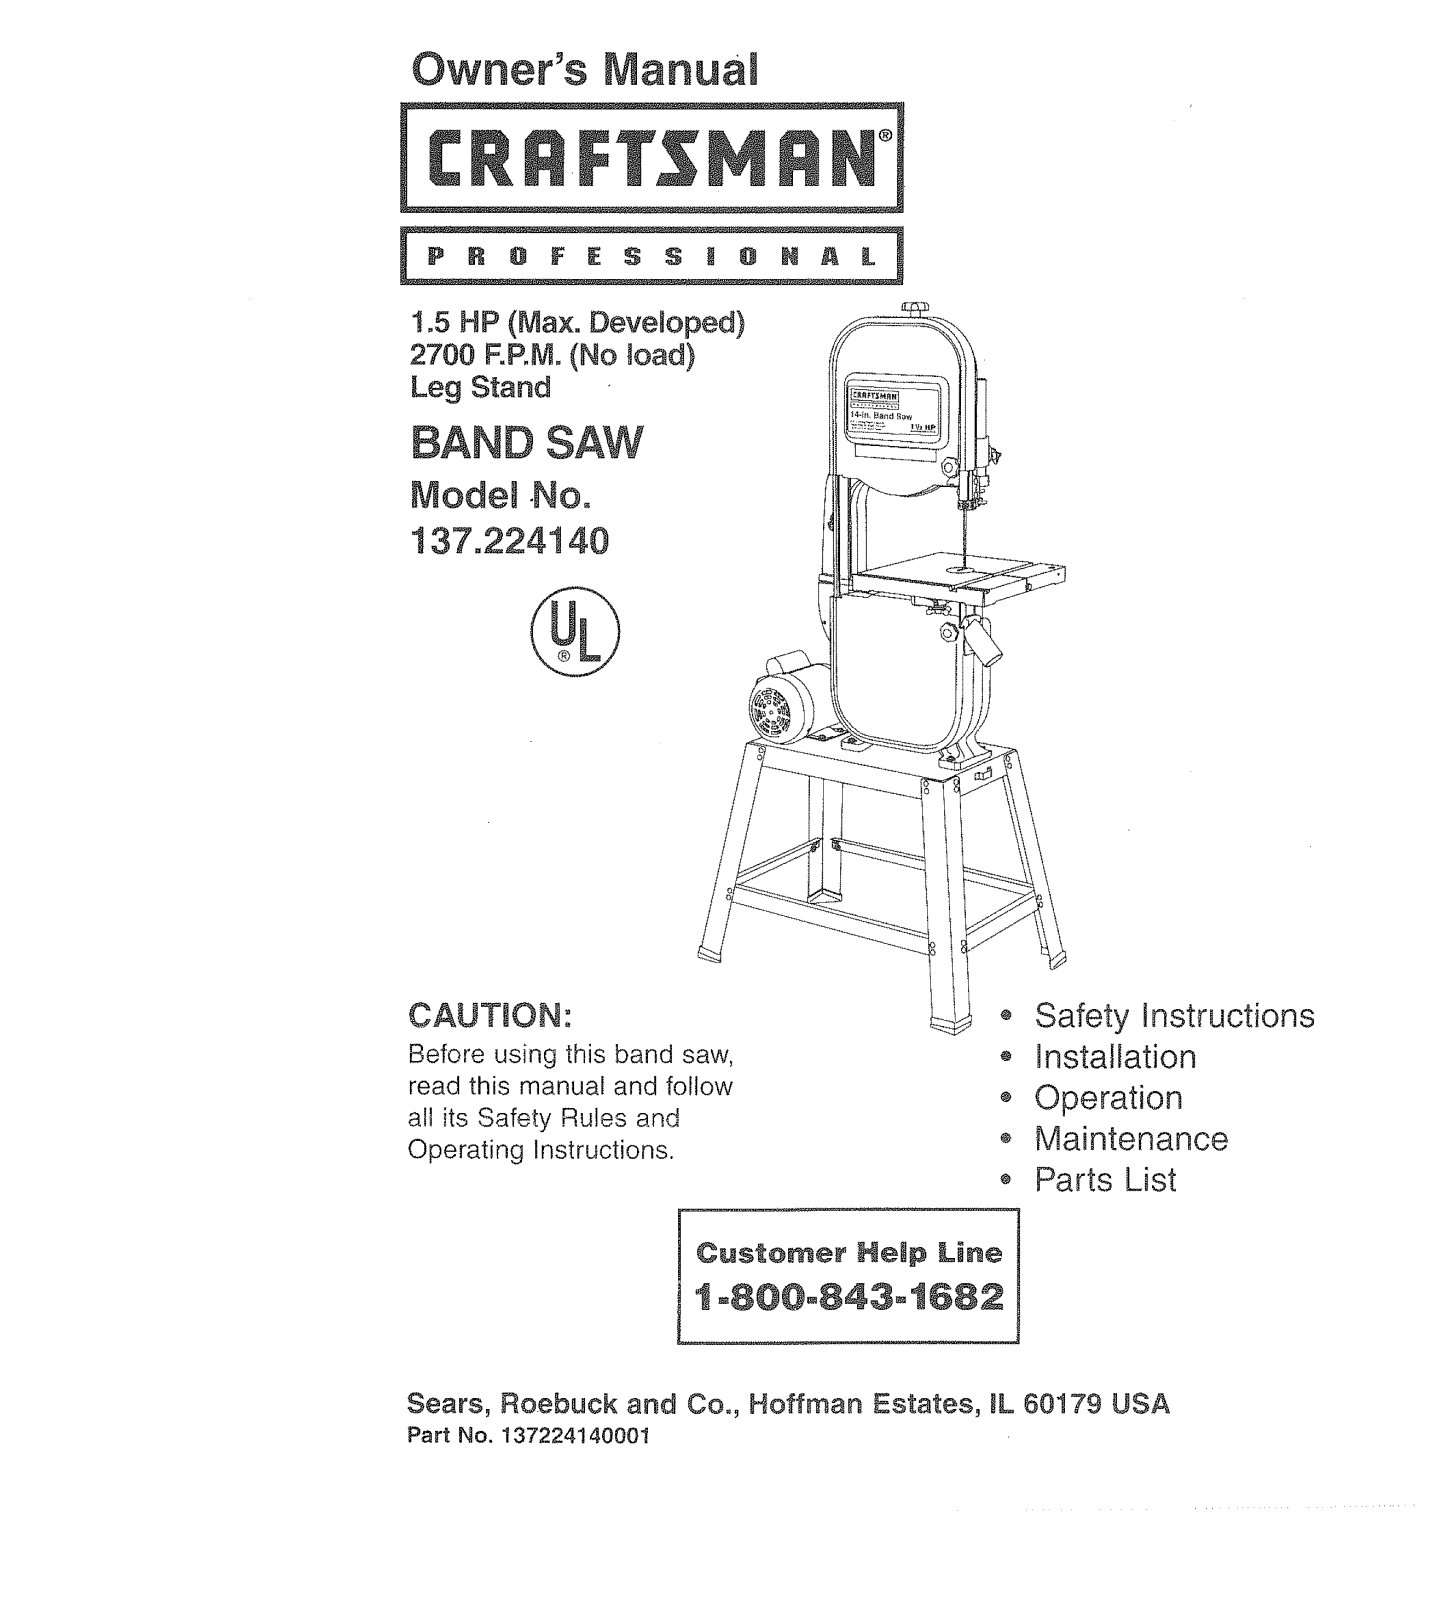 Craftsman 137224140 Owner’s Manual